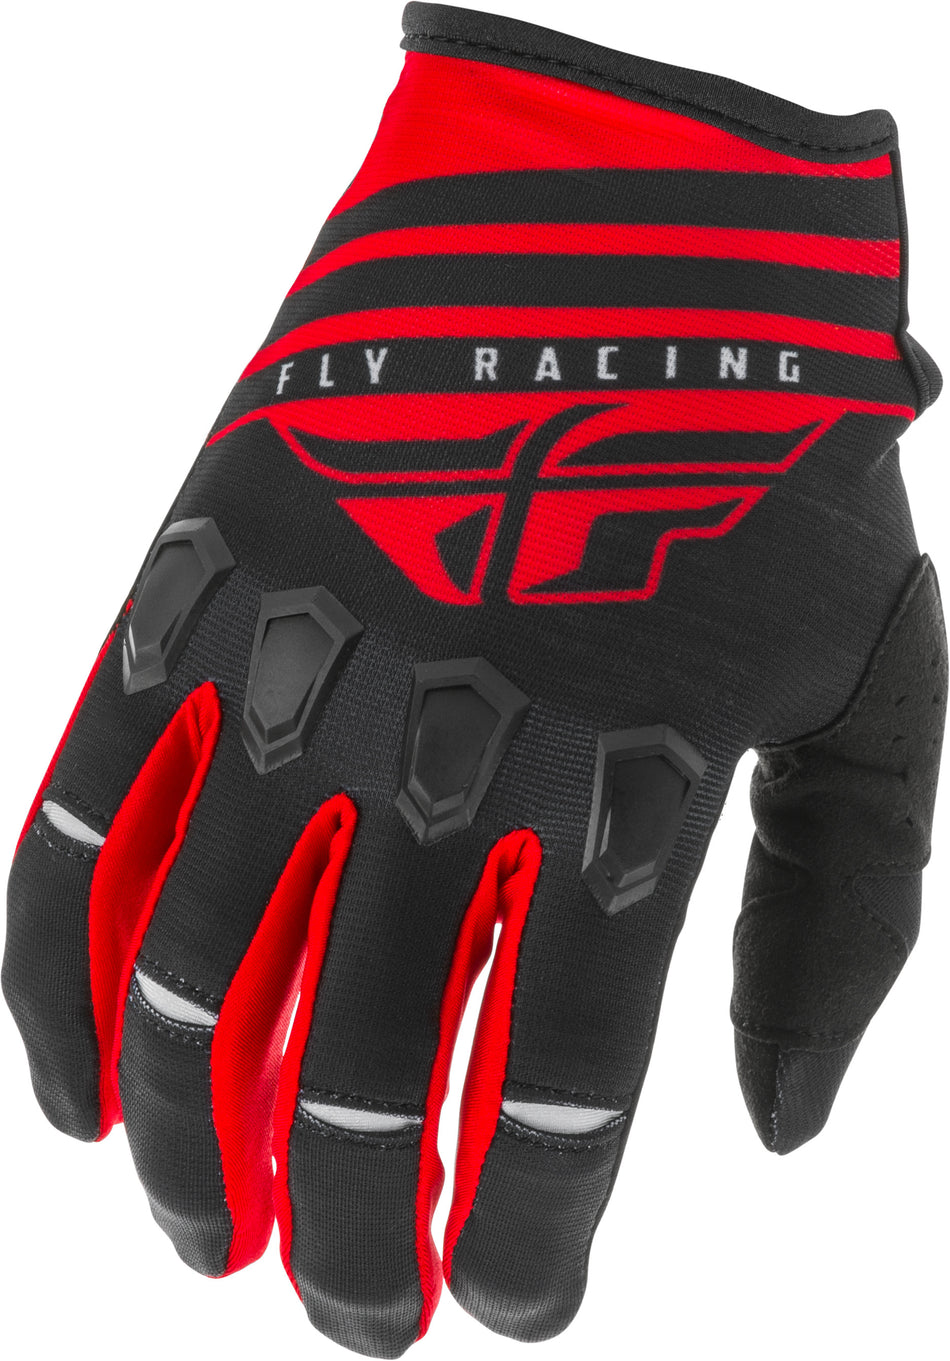 FLY RACING Kinetic K220 Gloves Red/Black/White Sz 11 373-51311